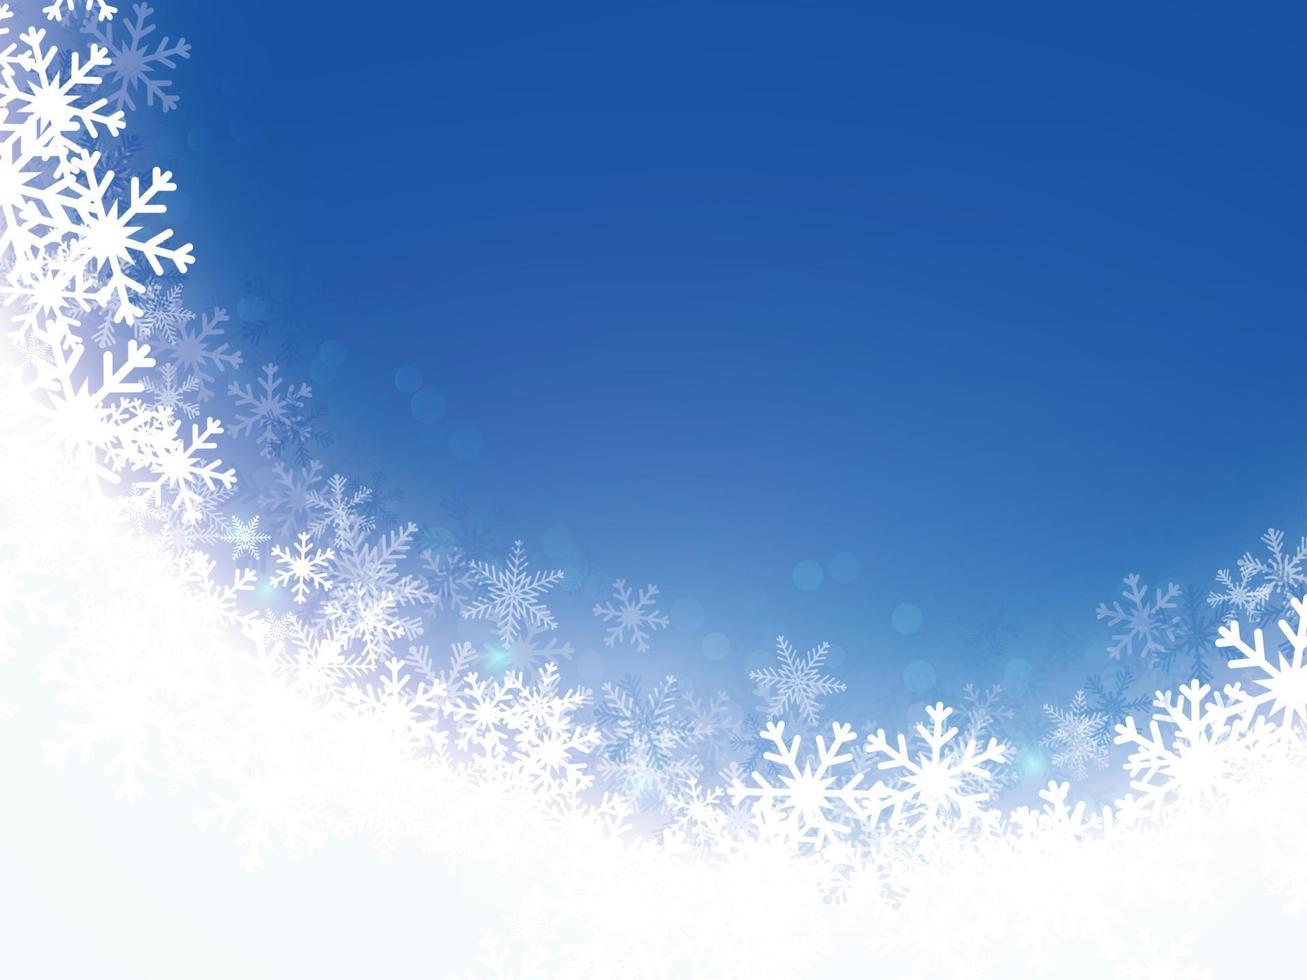 jul snöflingor ljus bakgrund. vektor illustration eps 1